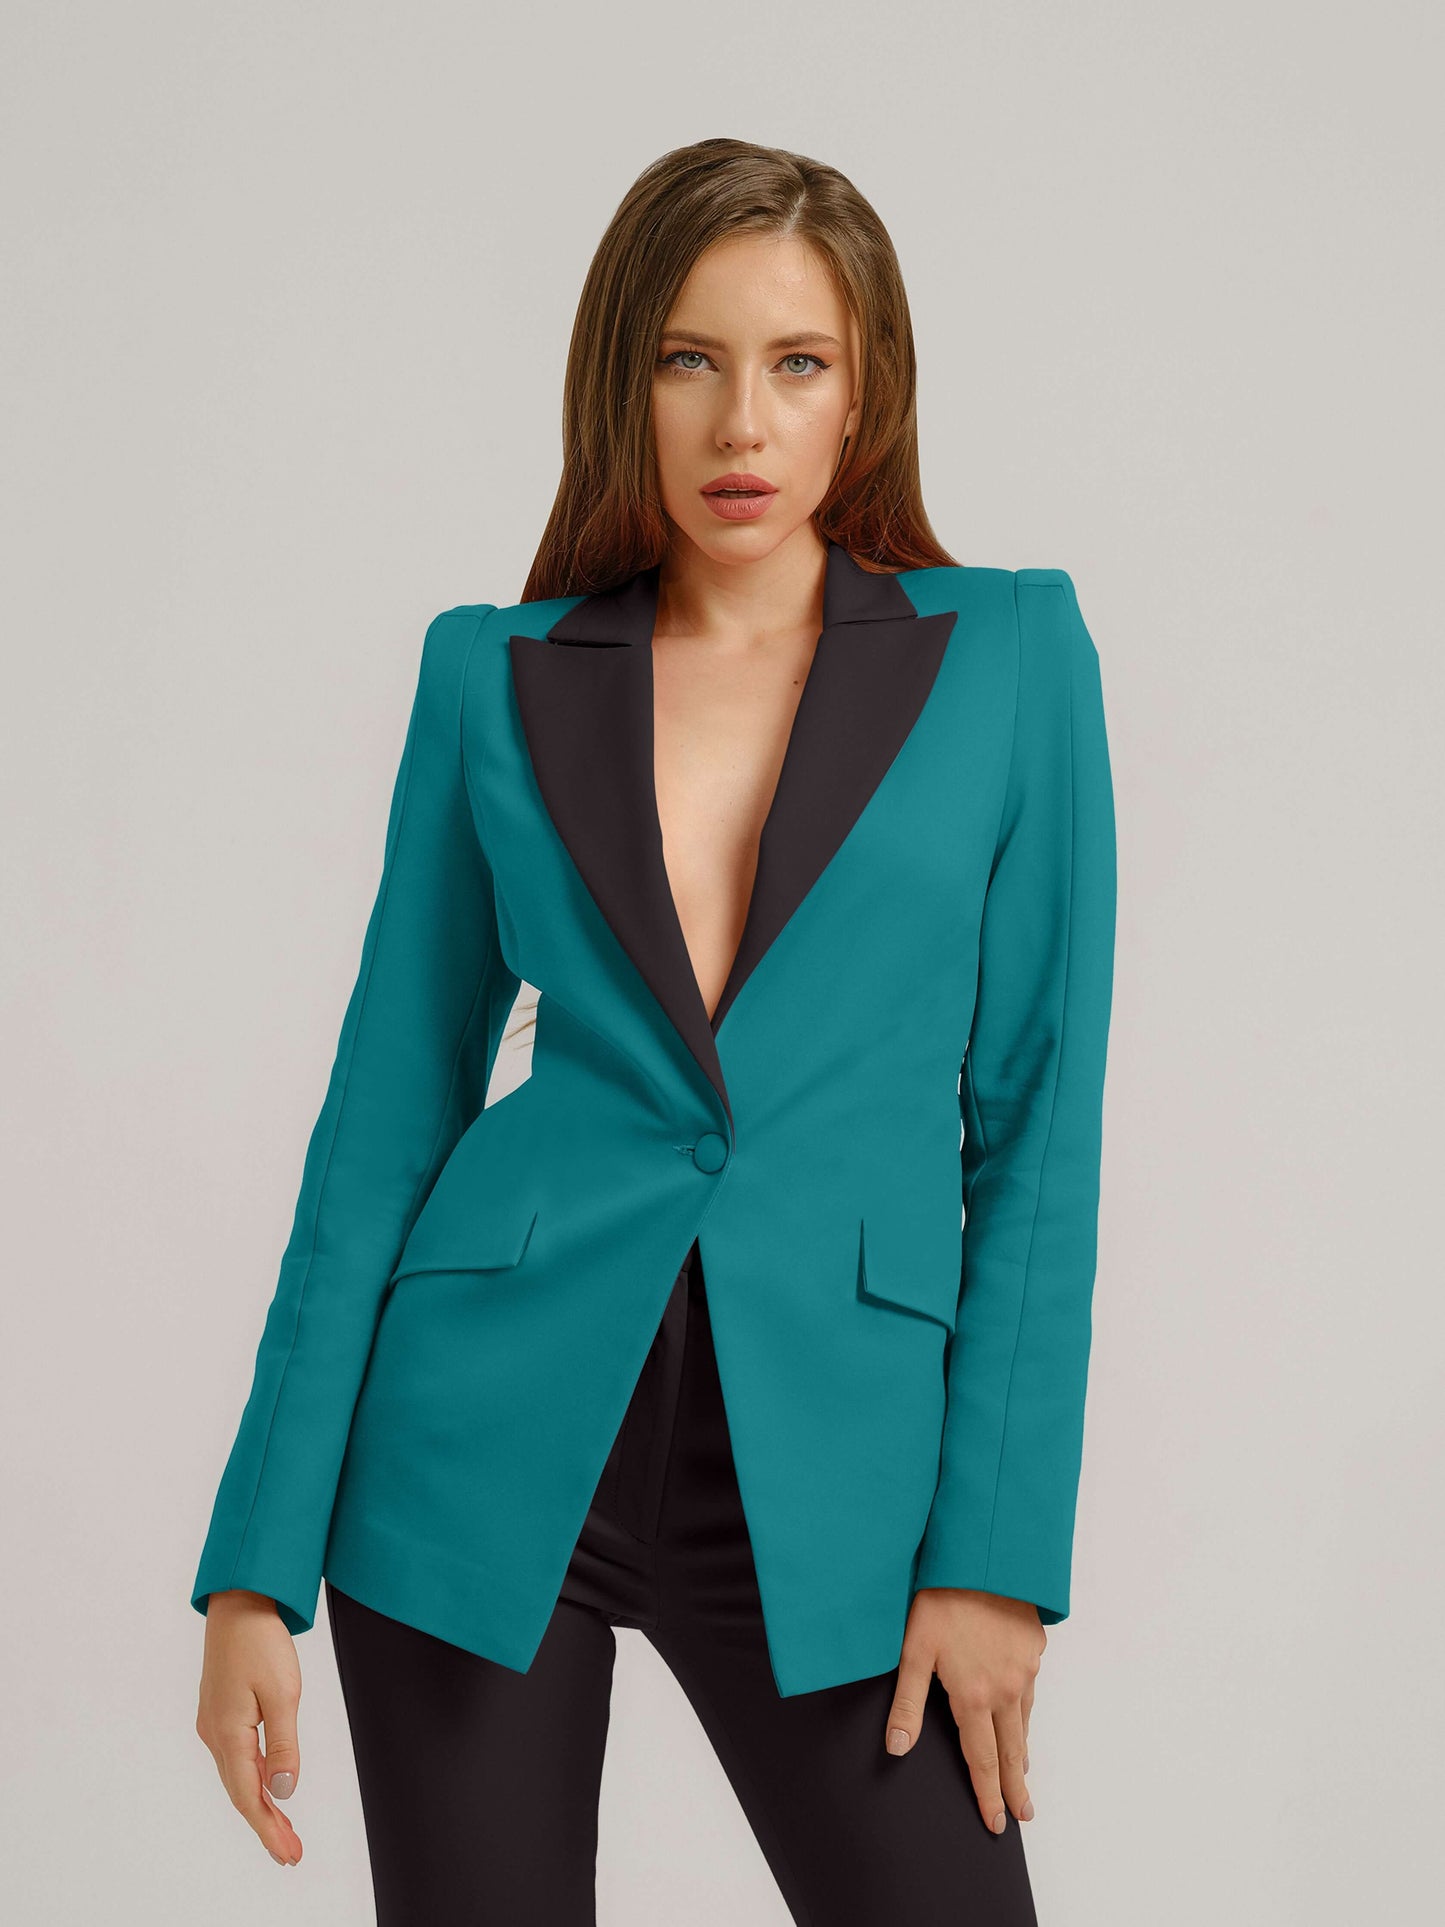 Illusion Classic Tailored Blazer - Turquoise & Black by Tia Dorraine Women's Luxury Fashion Designer Clothing Brand